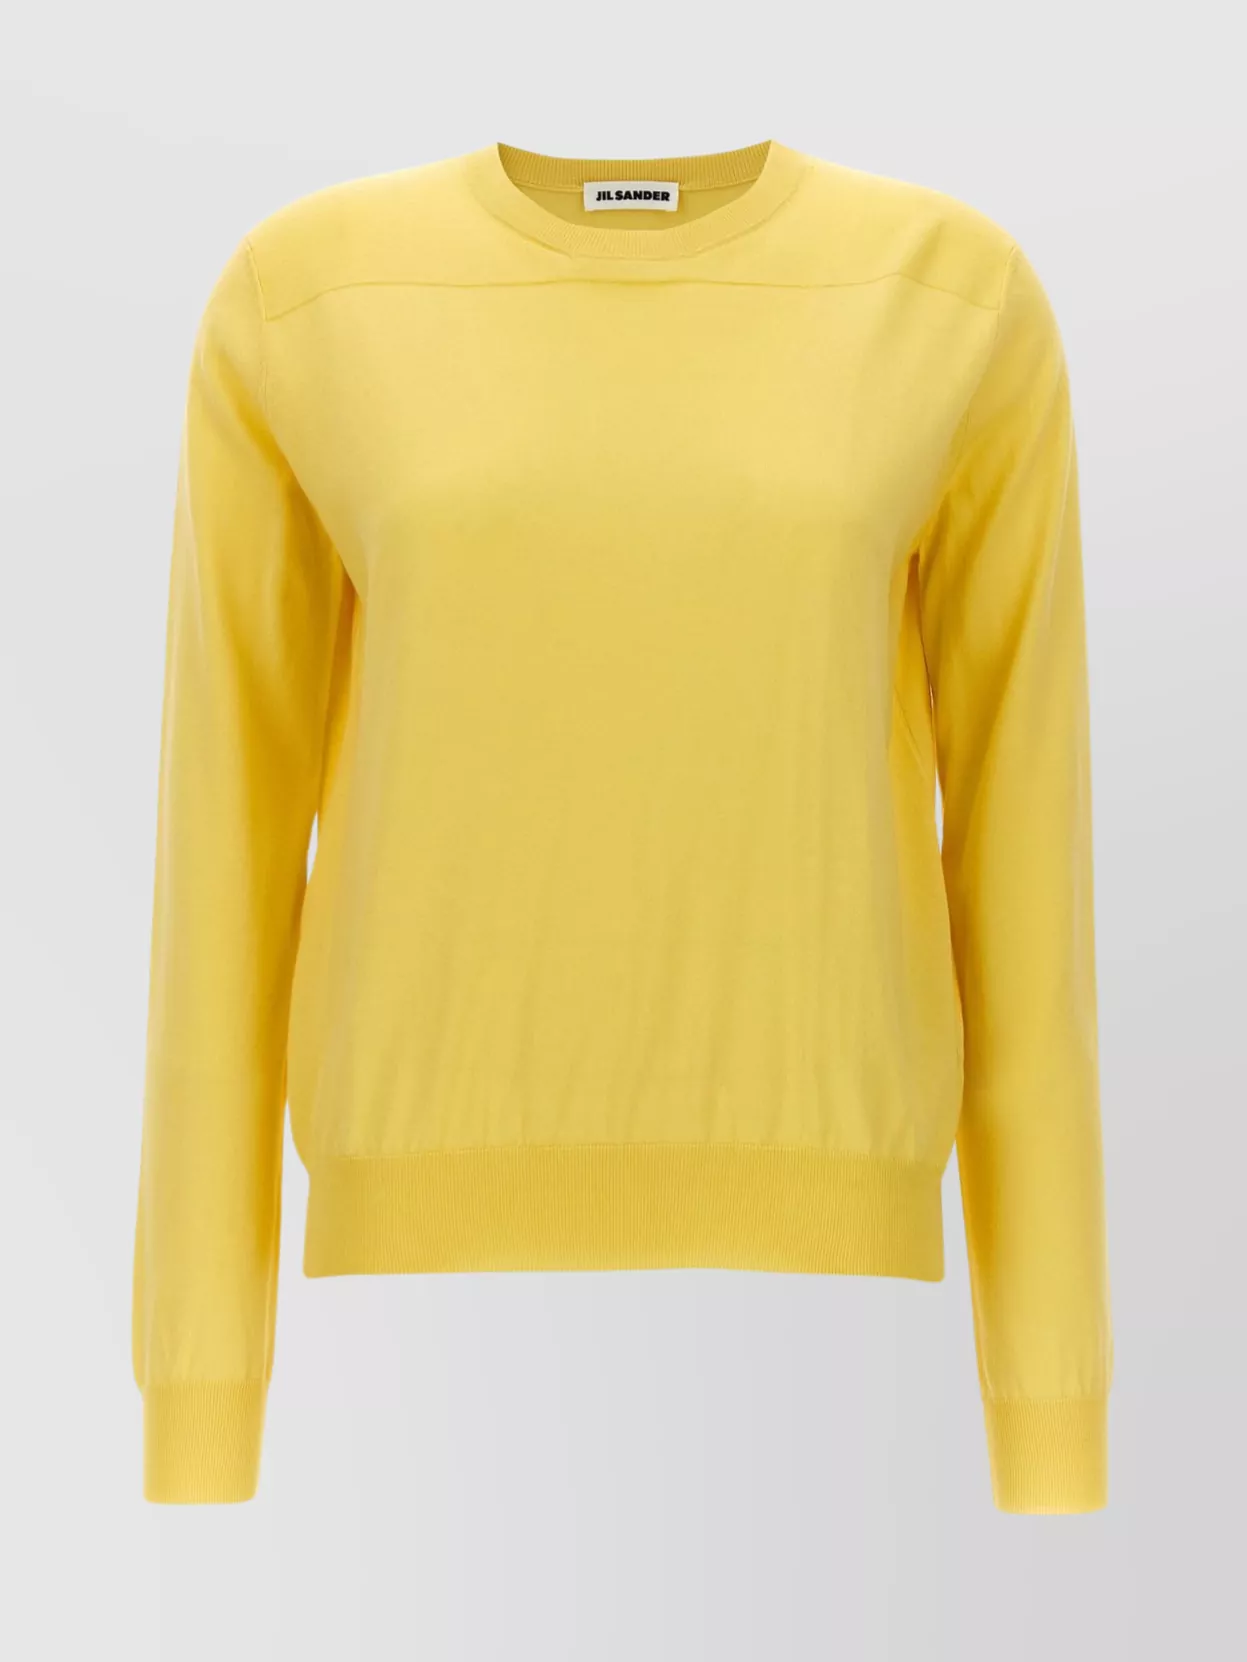 Jil Sander Crew Neck Knit Sweater In Yellow